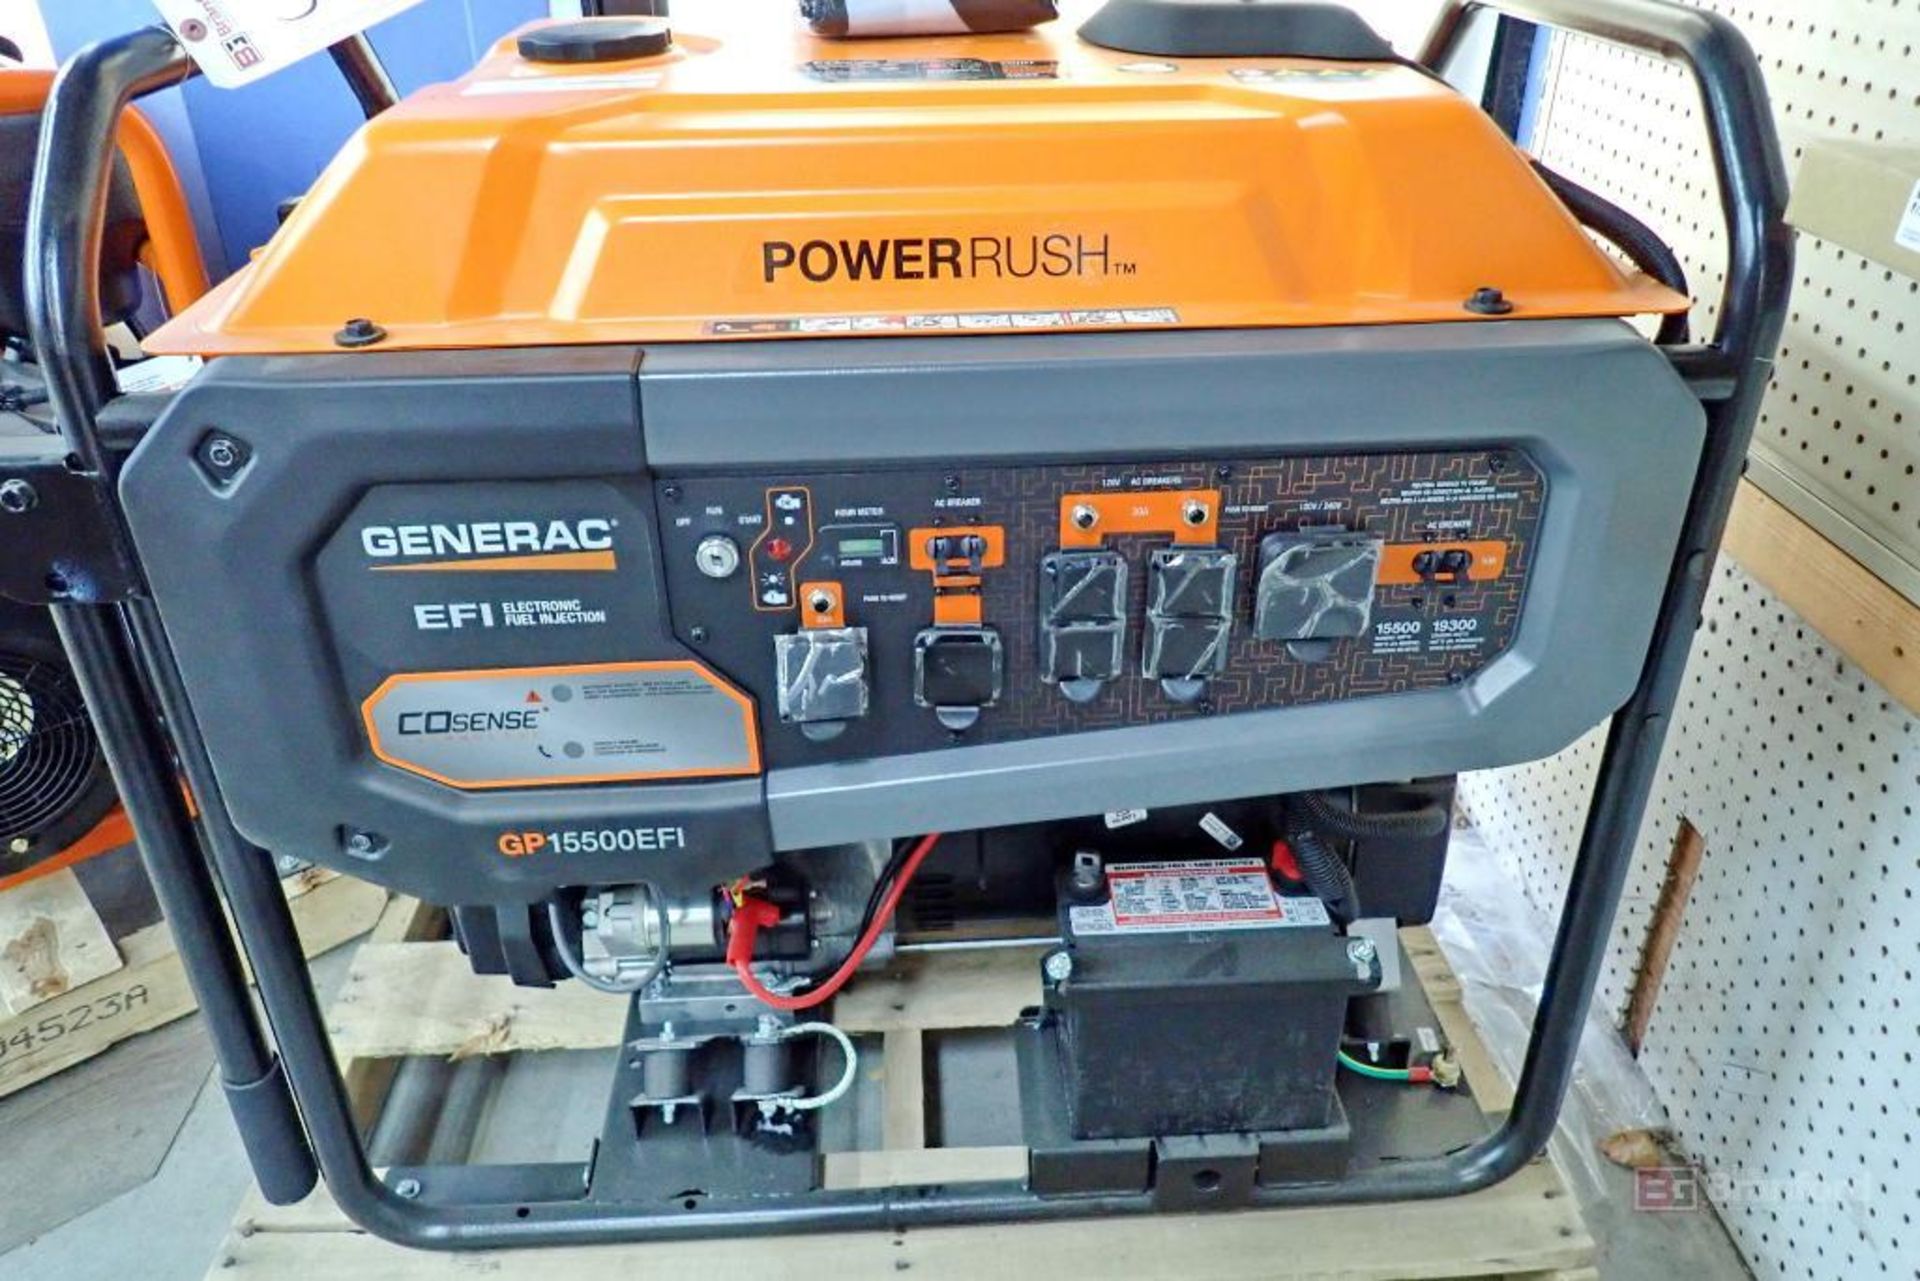 GENERAC Power Rush GP15500EFI Gas Powered Generator - Image 2 of 11